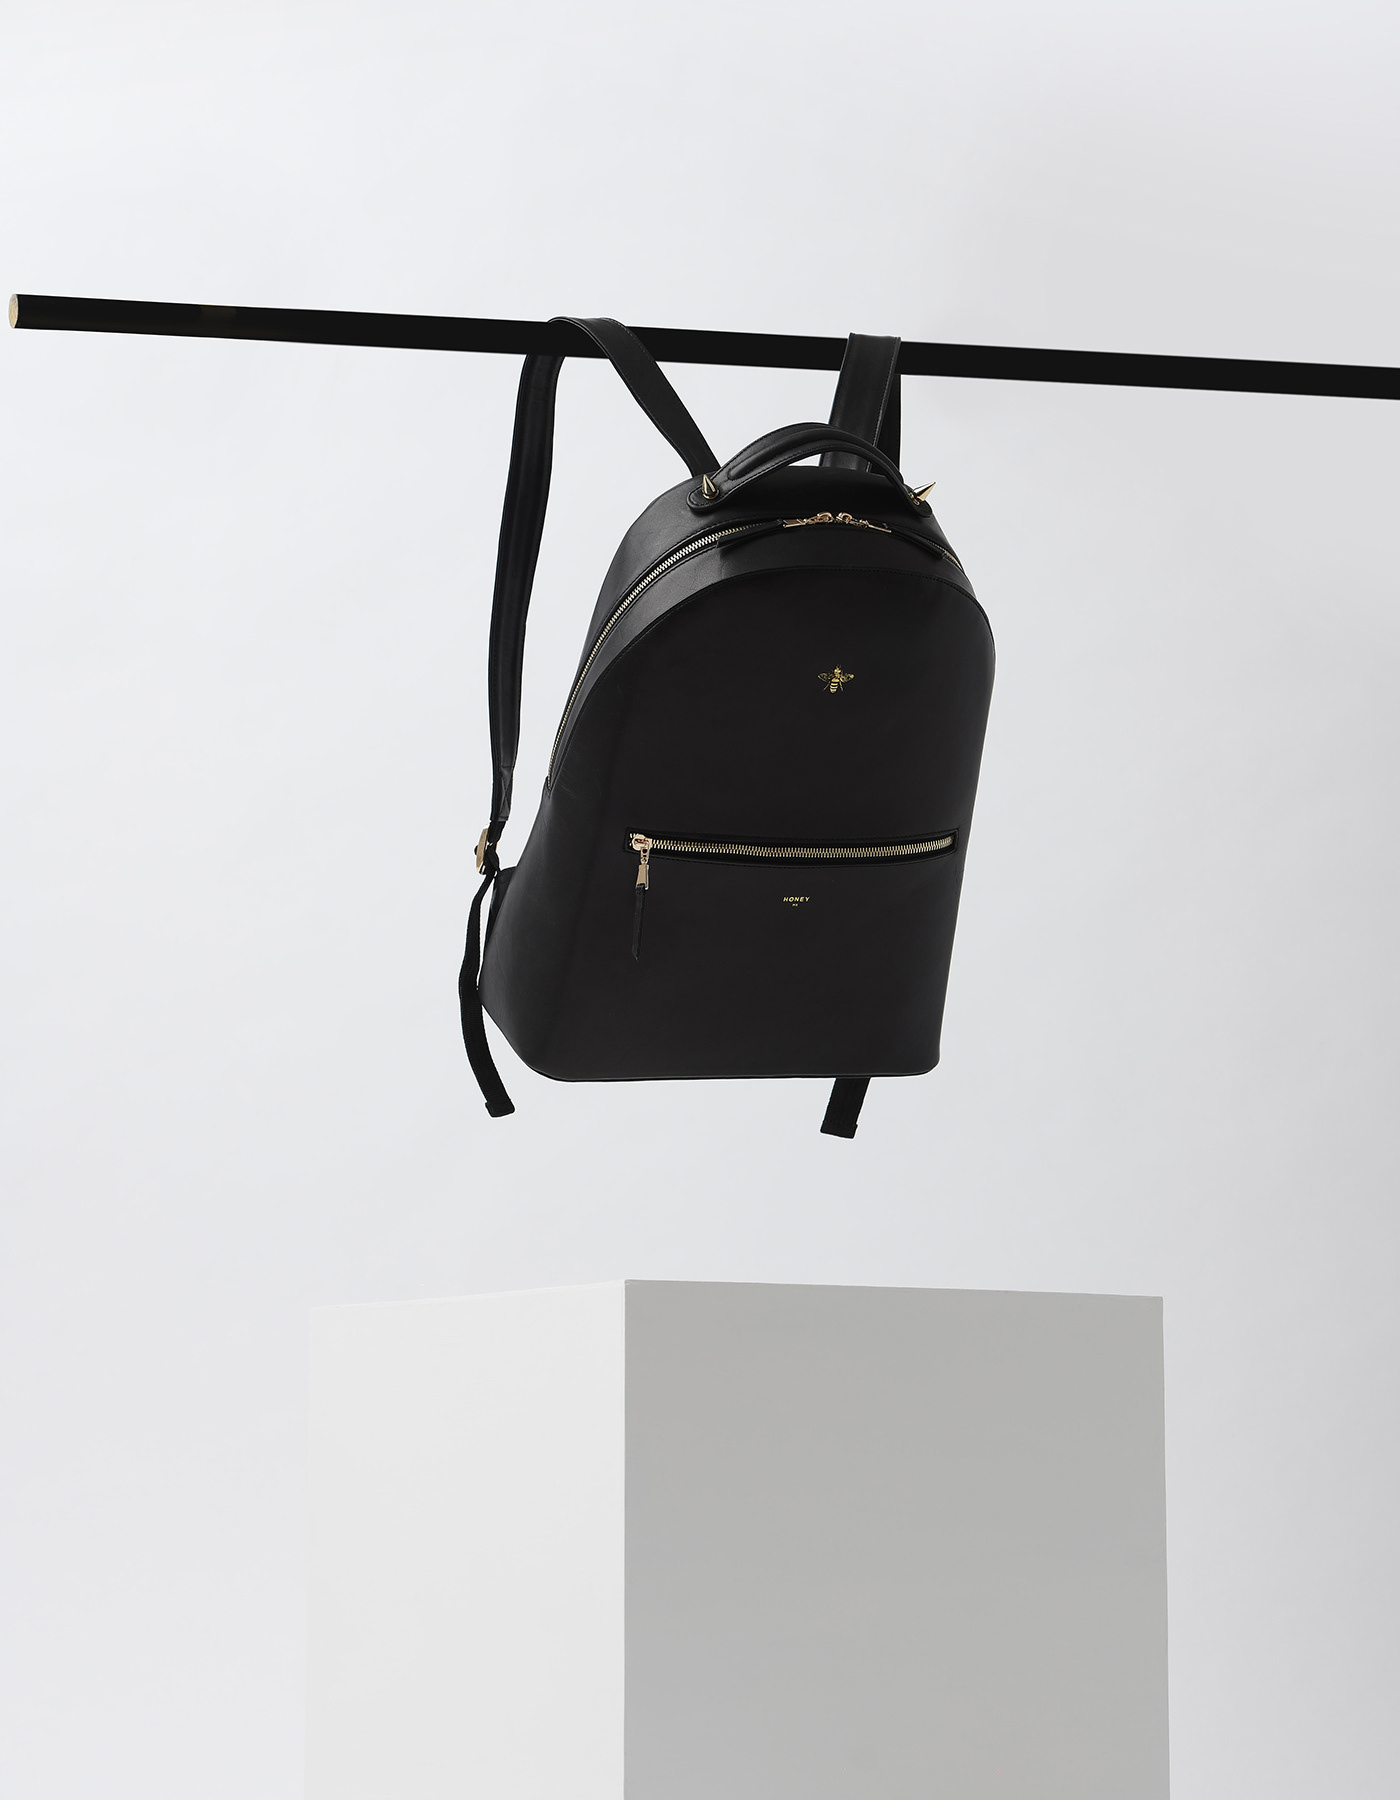 accesories Apparel Design backpack concept design leathergoods